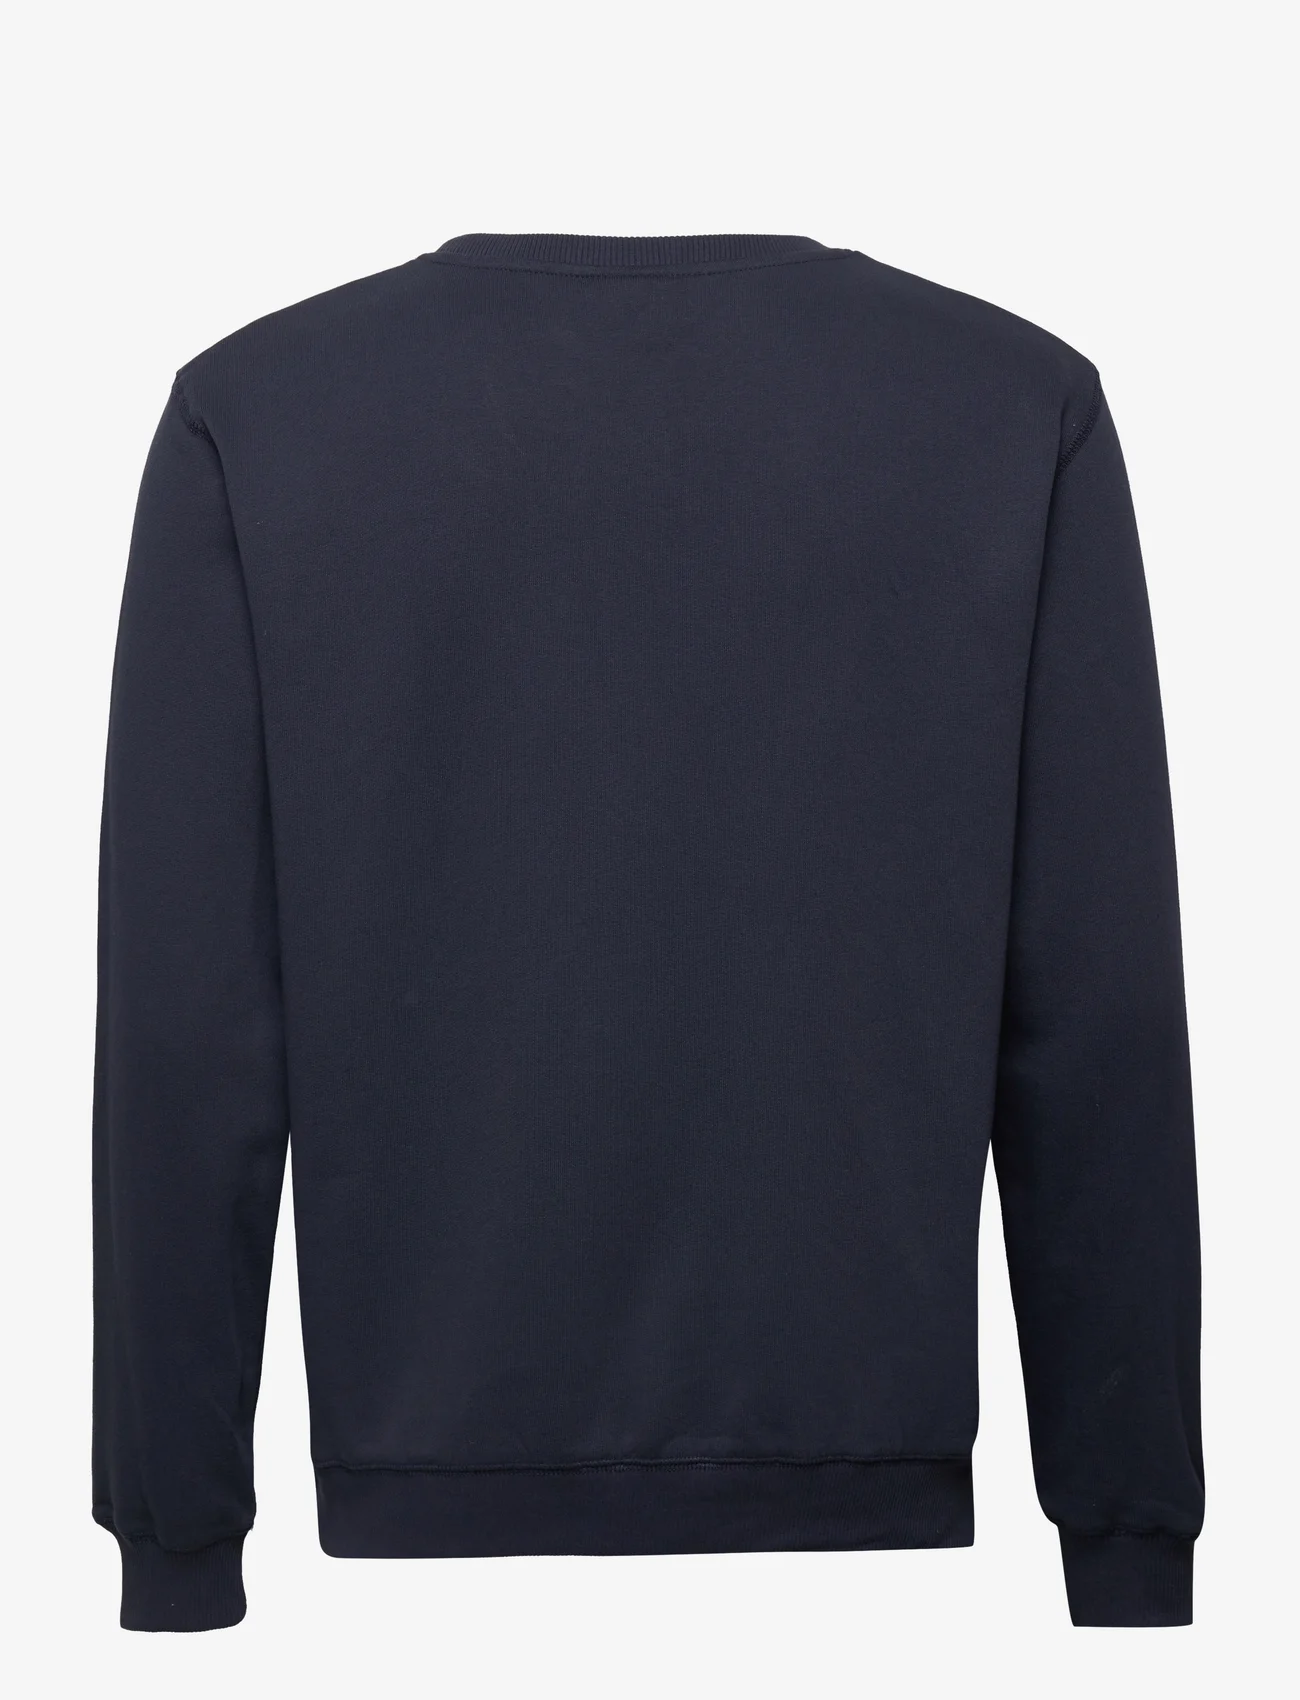 Makia - Brand Sweatshirt - svetarit - dark blue - 1